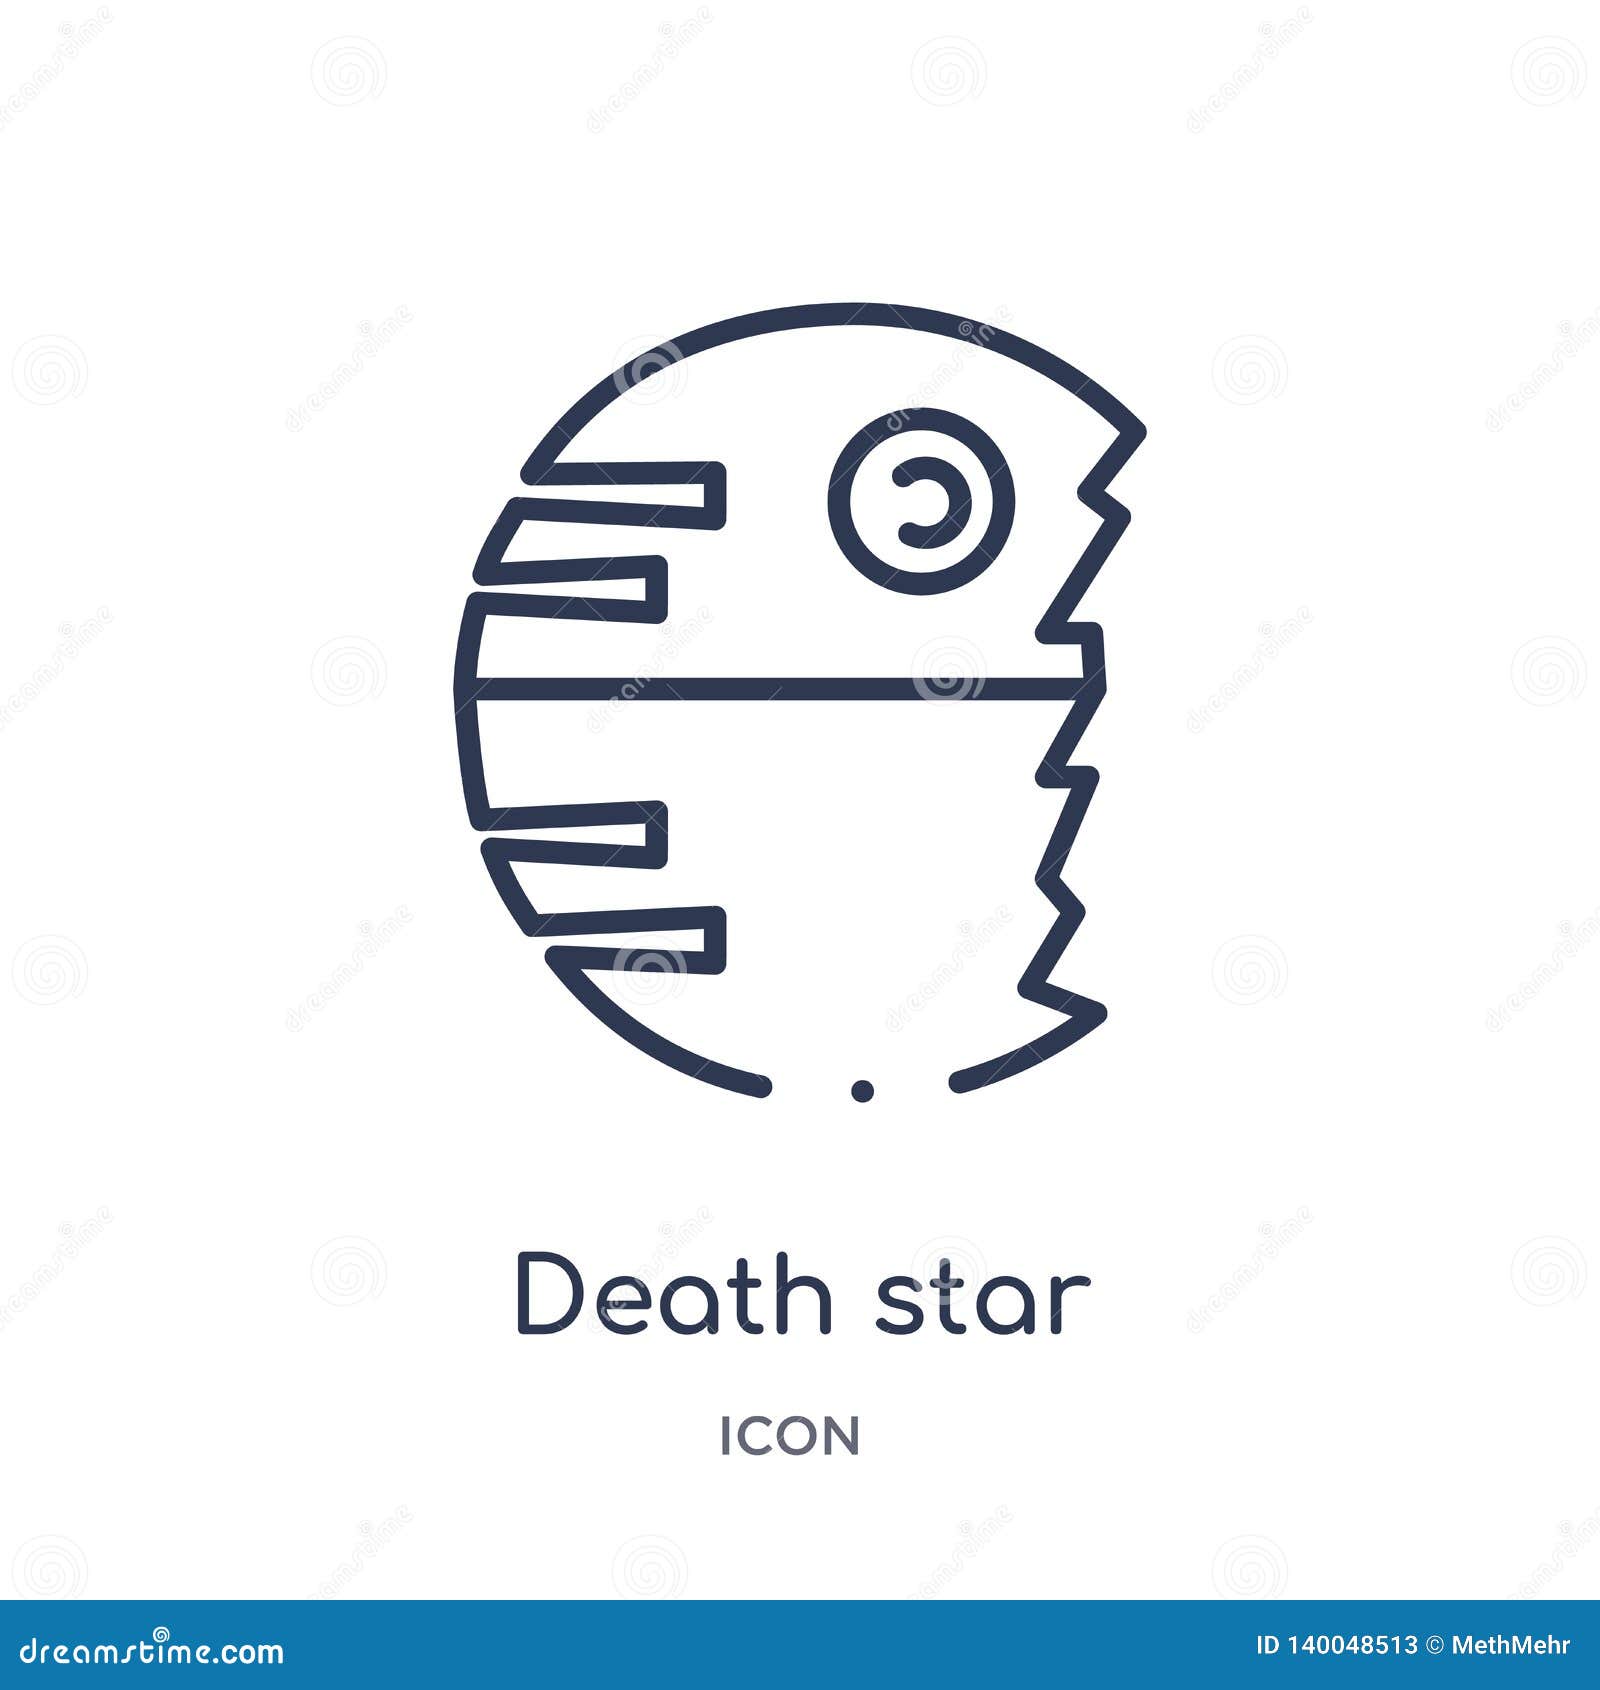 death star vector image